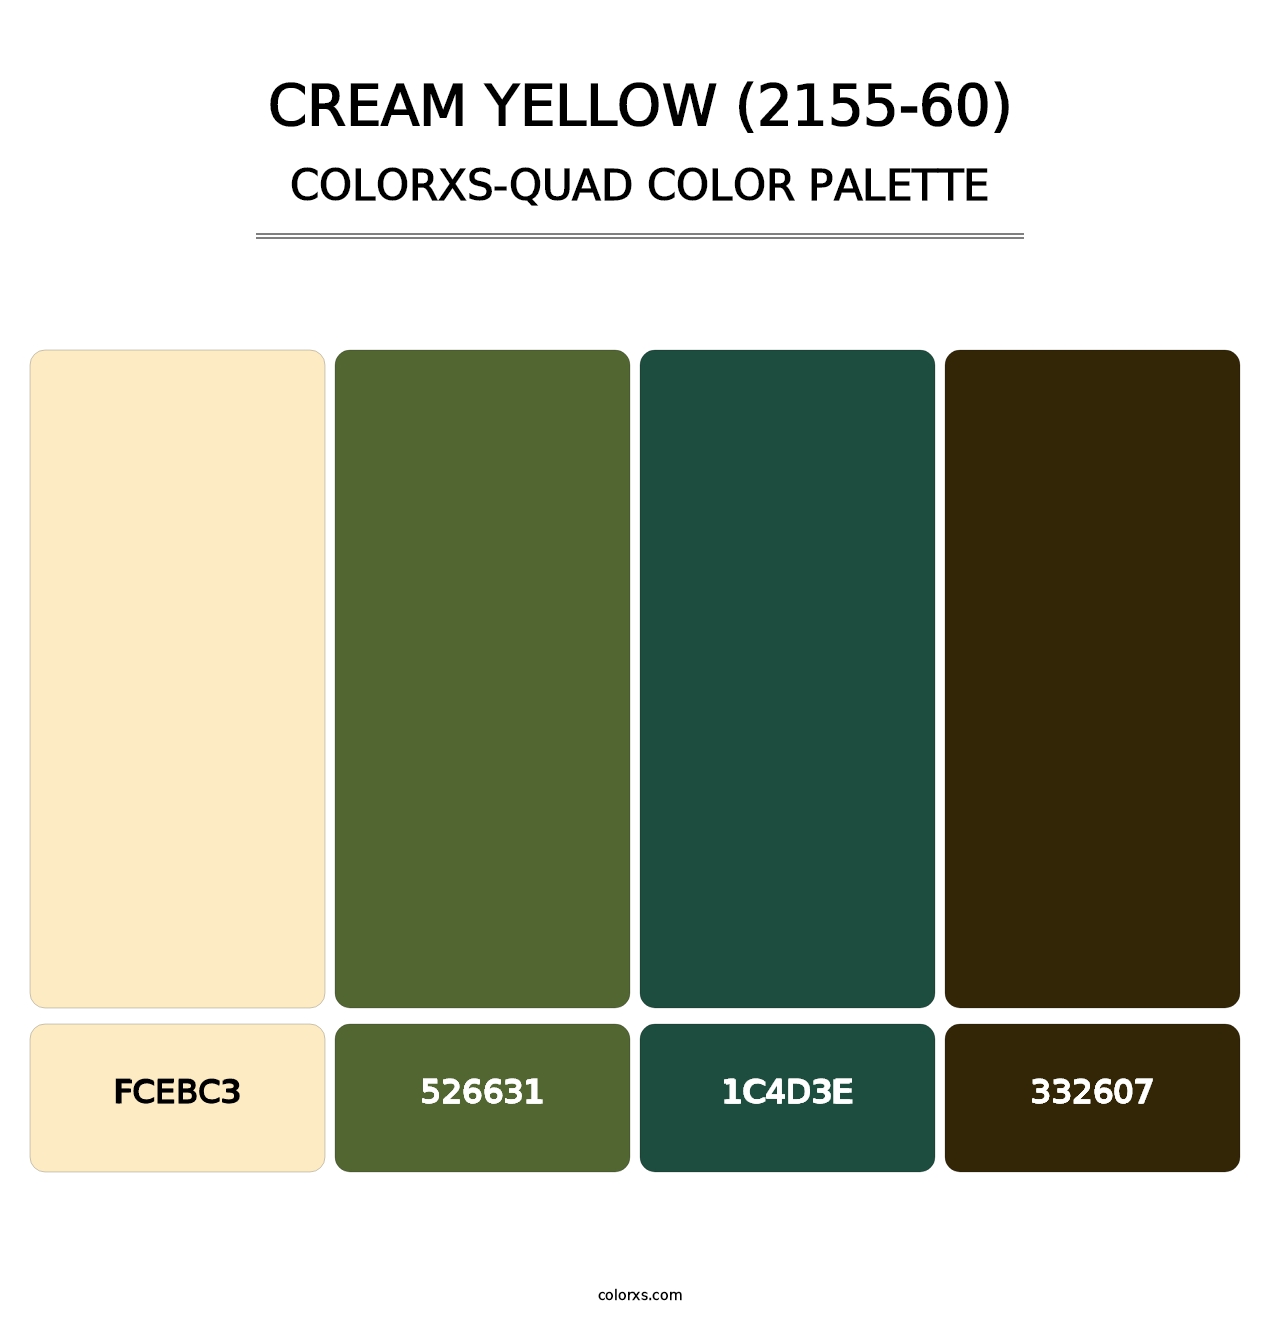 Cream Yellow (2155-60) - Colorxs Quad Palette